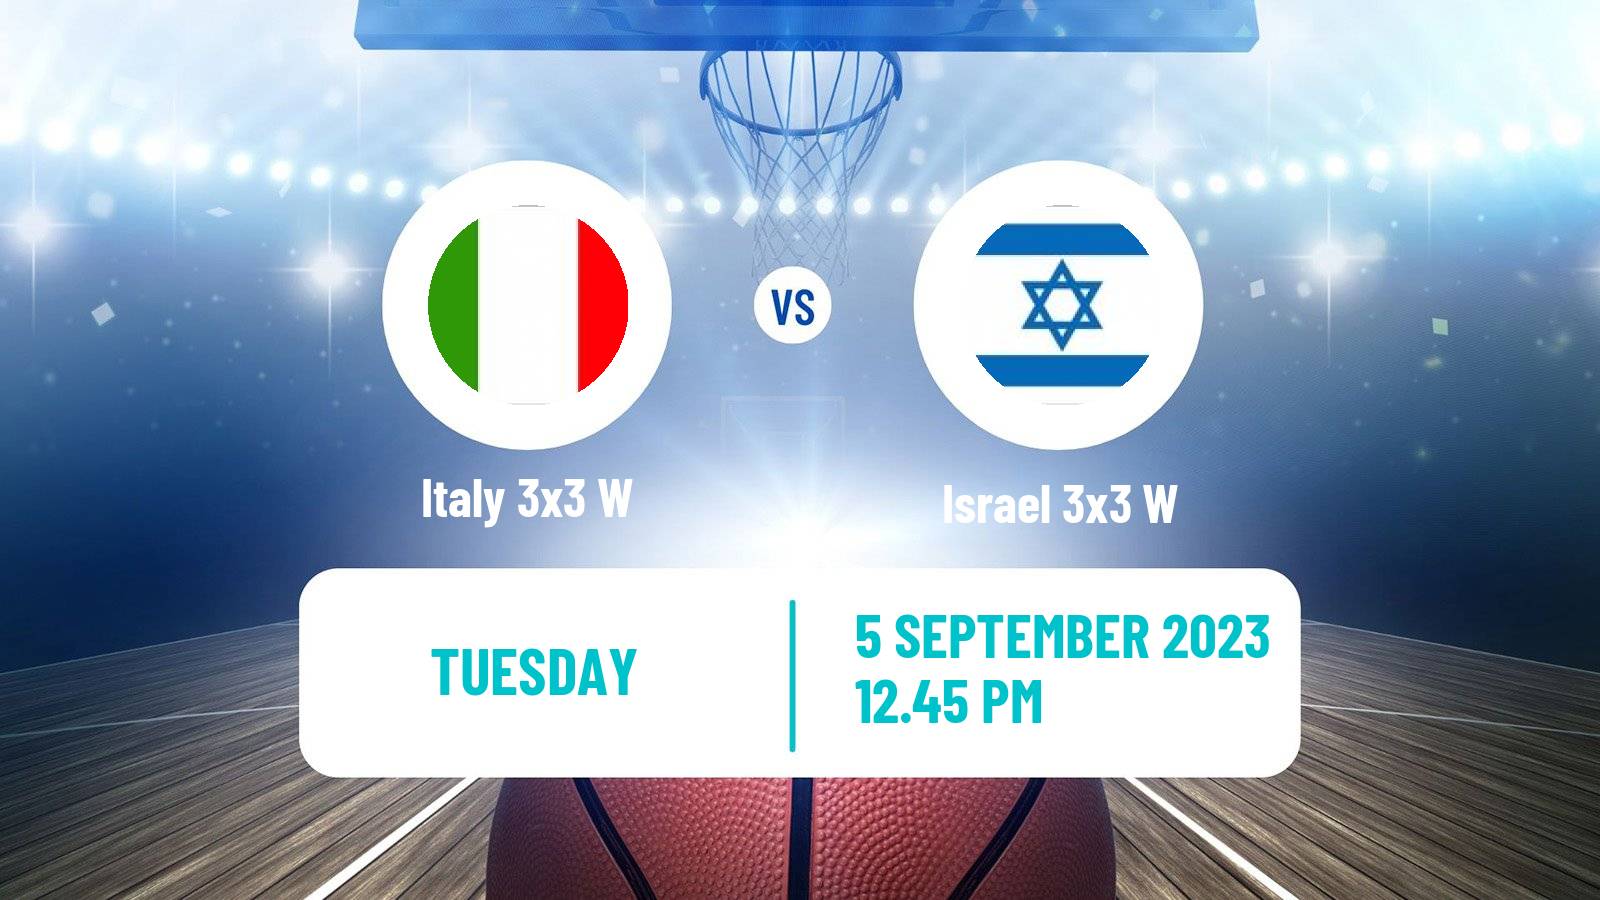 Basketball Europe Cup Basketball 3x3 Women Italy 3x3 W - Israel 3x3 W